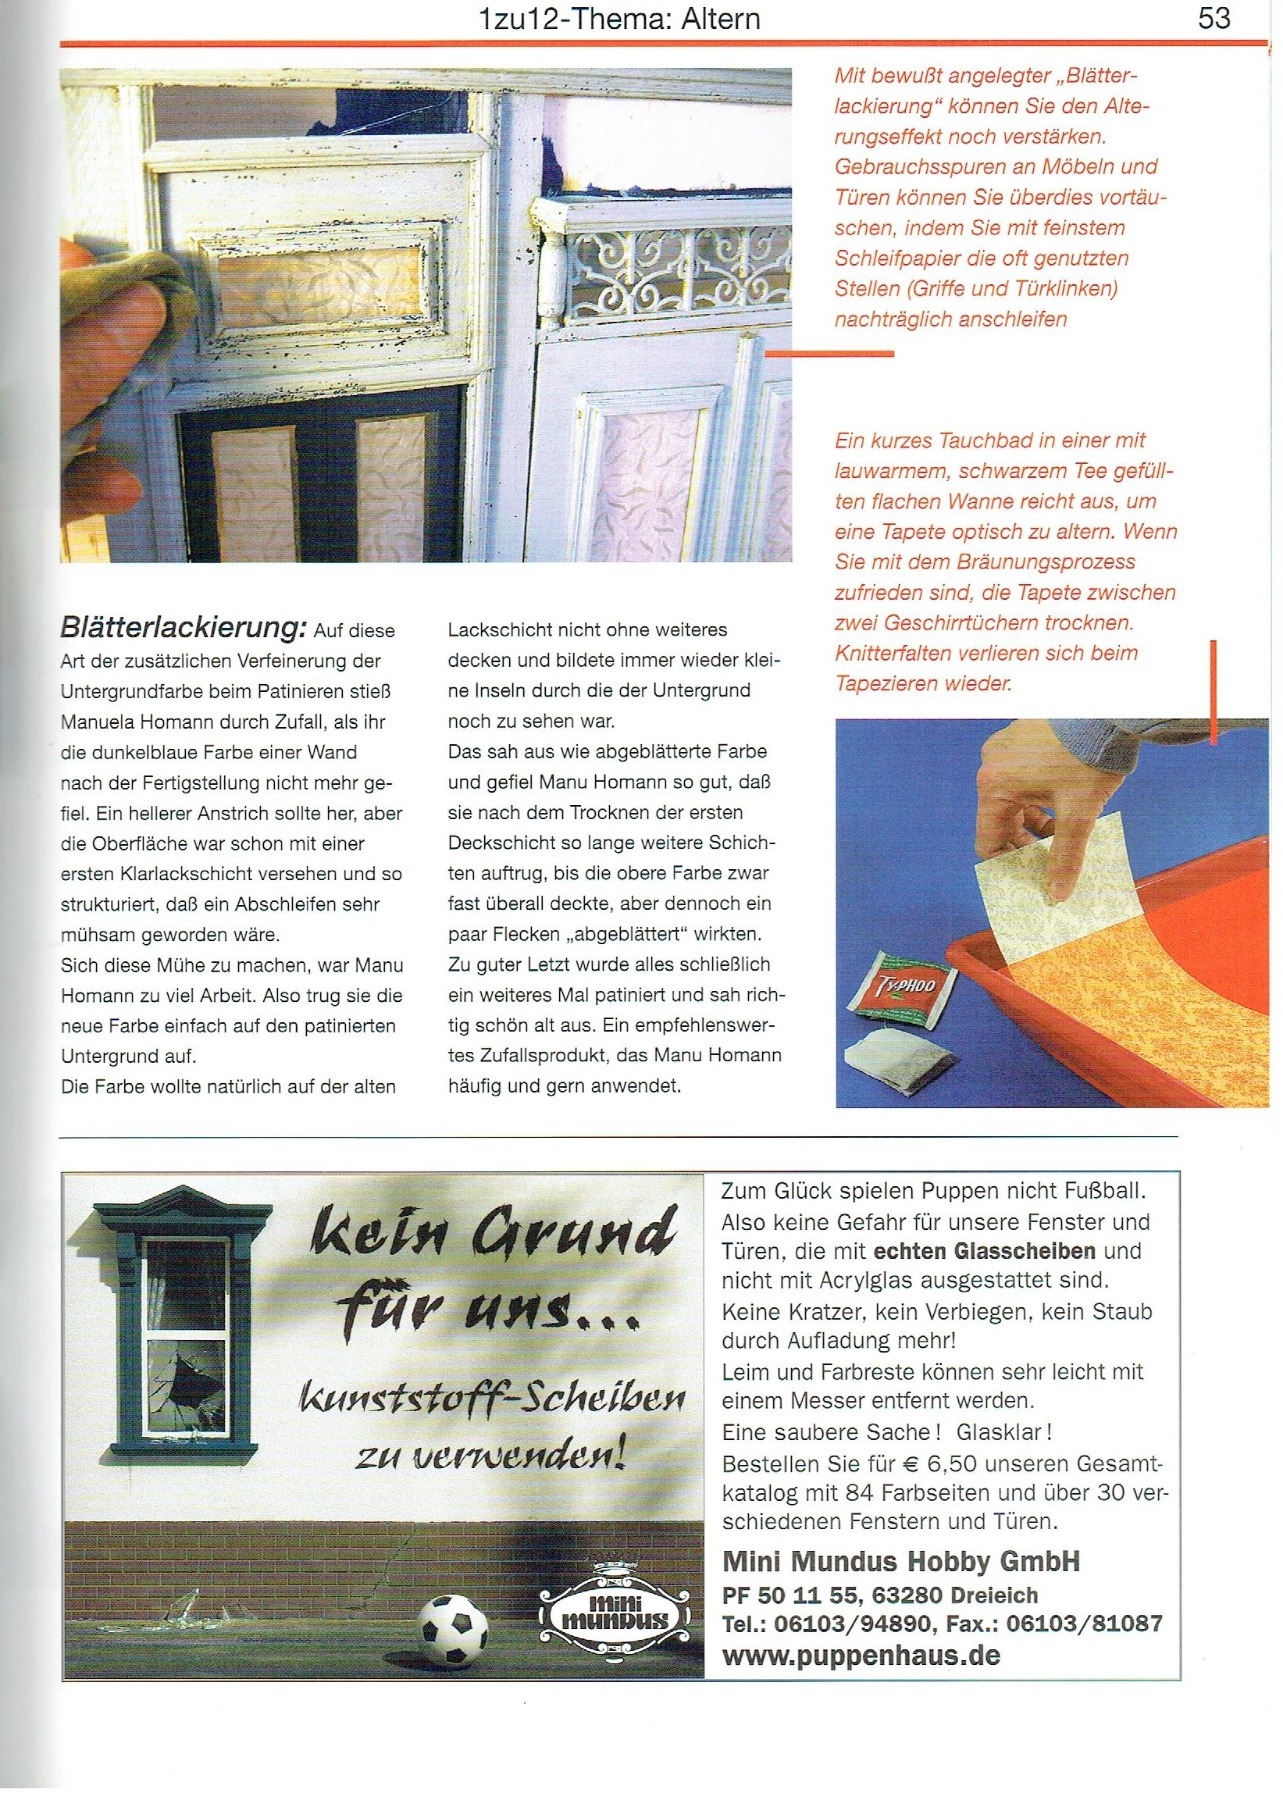 Nr. 25 - 1zu12 Das Magazin, September/Oktober 2005 2